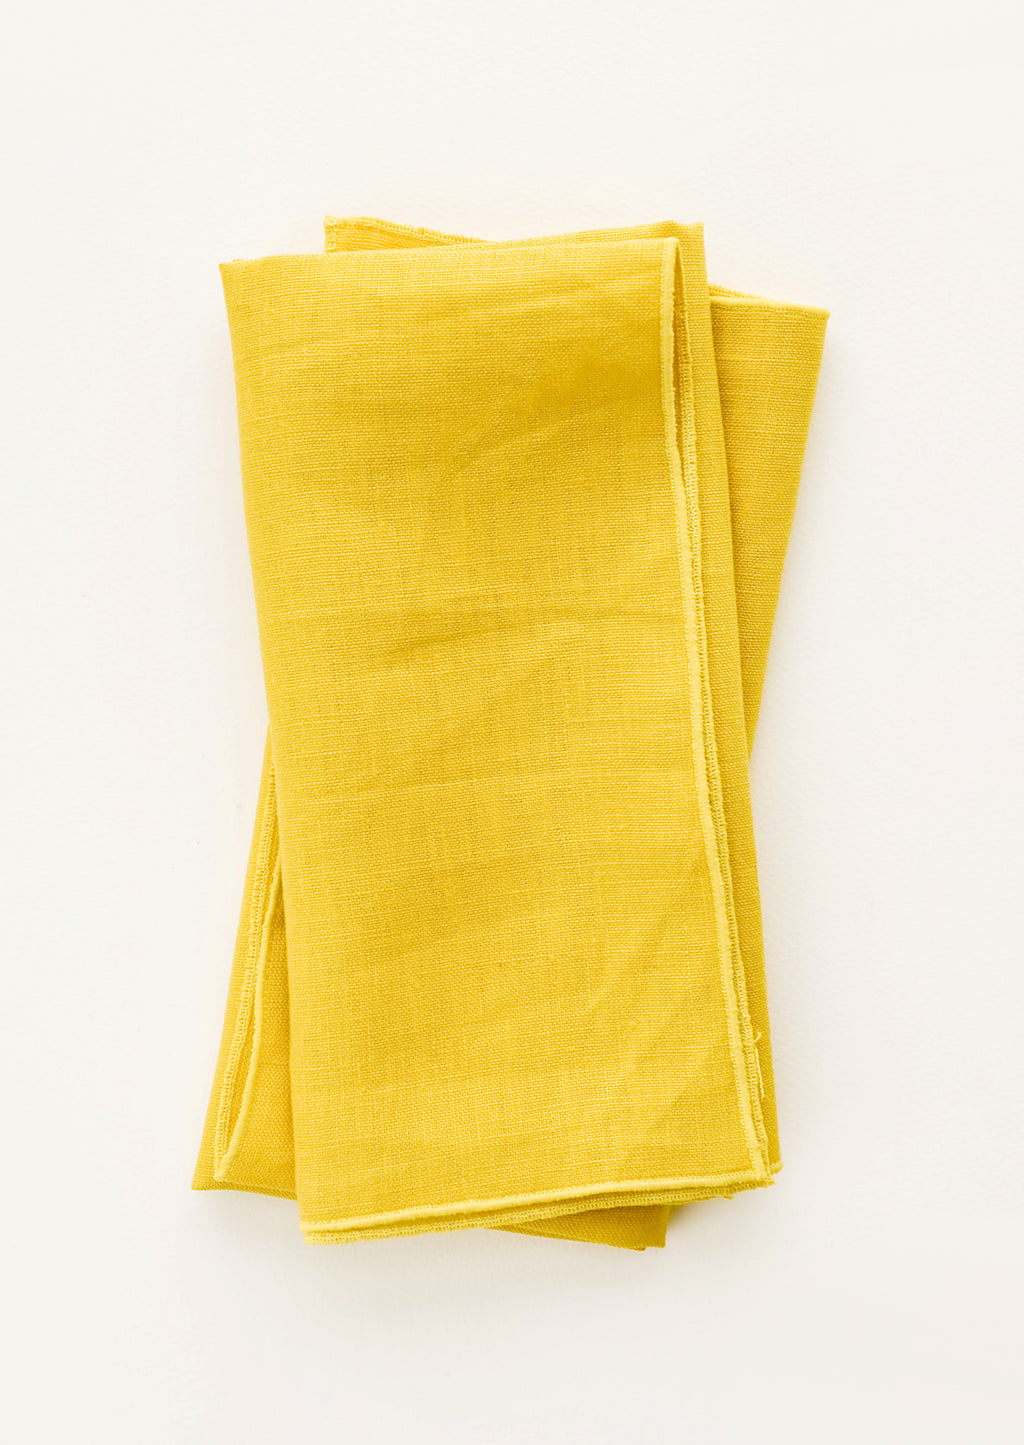 Sunshine: Pair of folded Linen Napkins in Yellow.